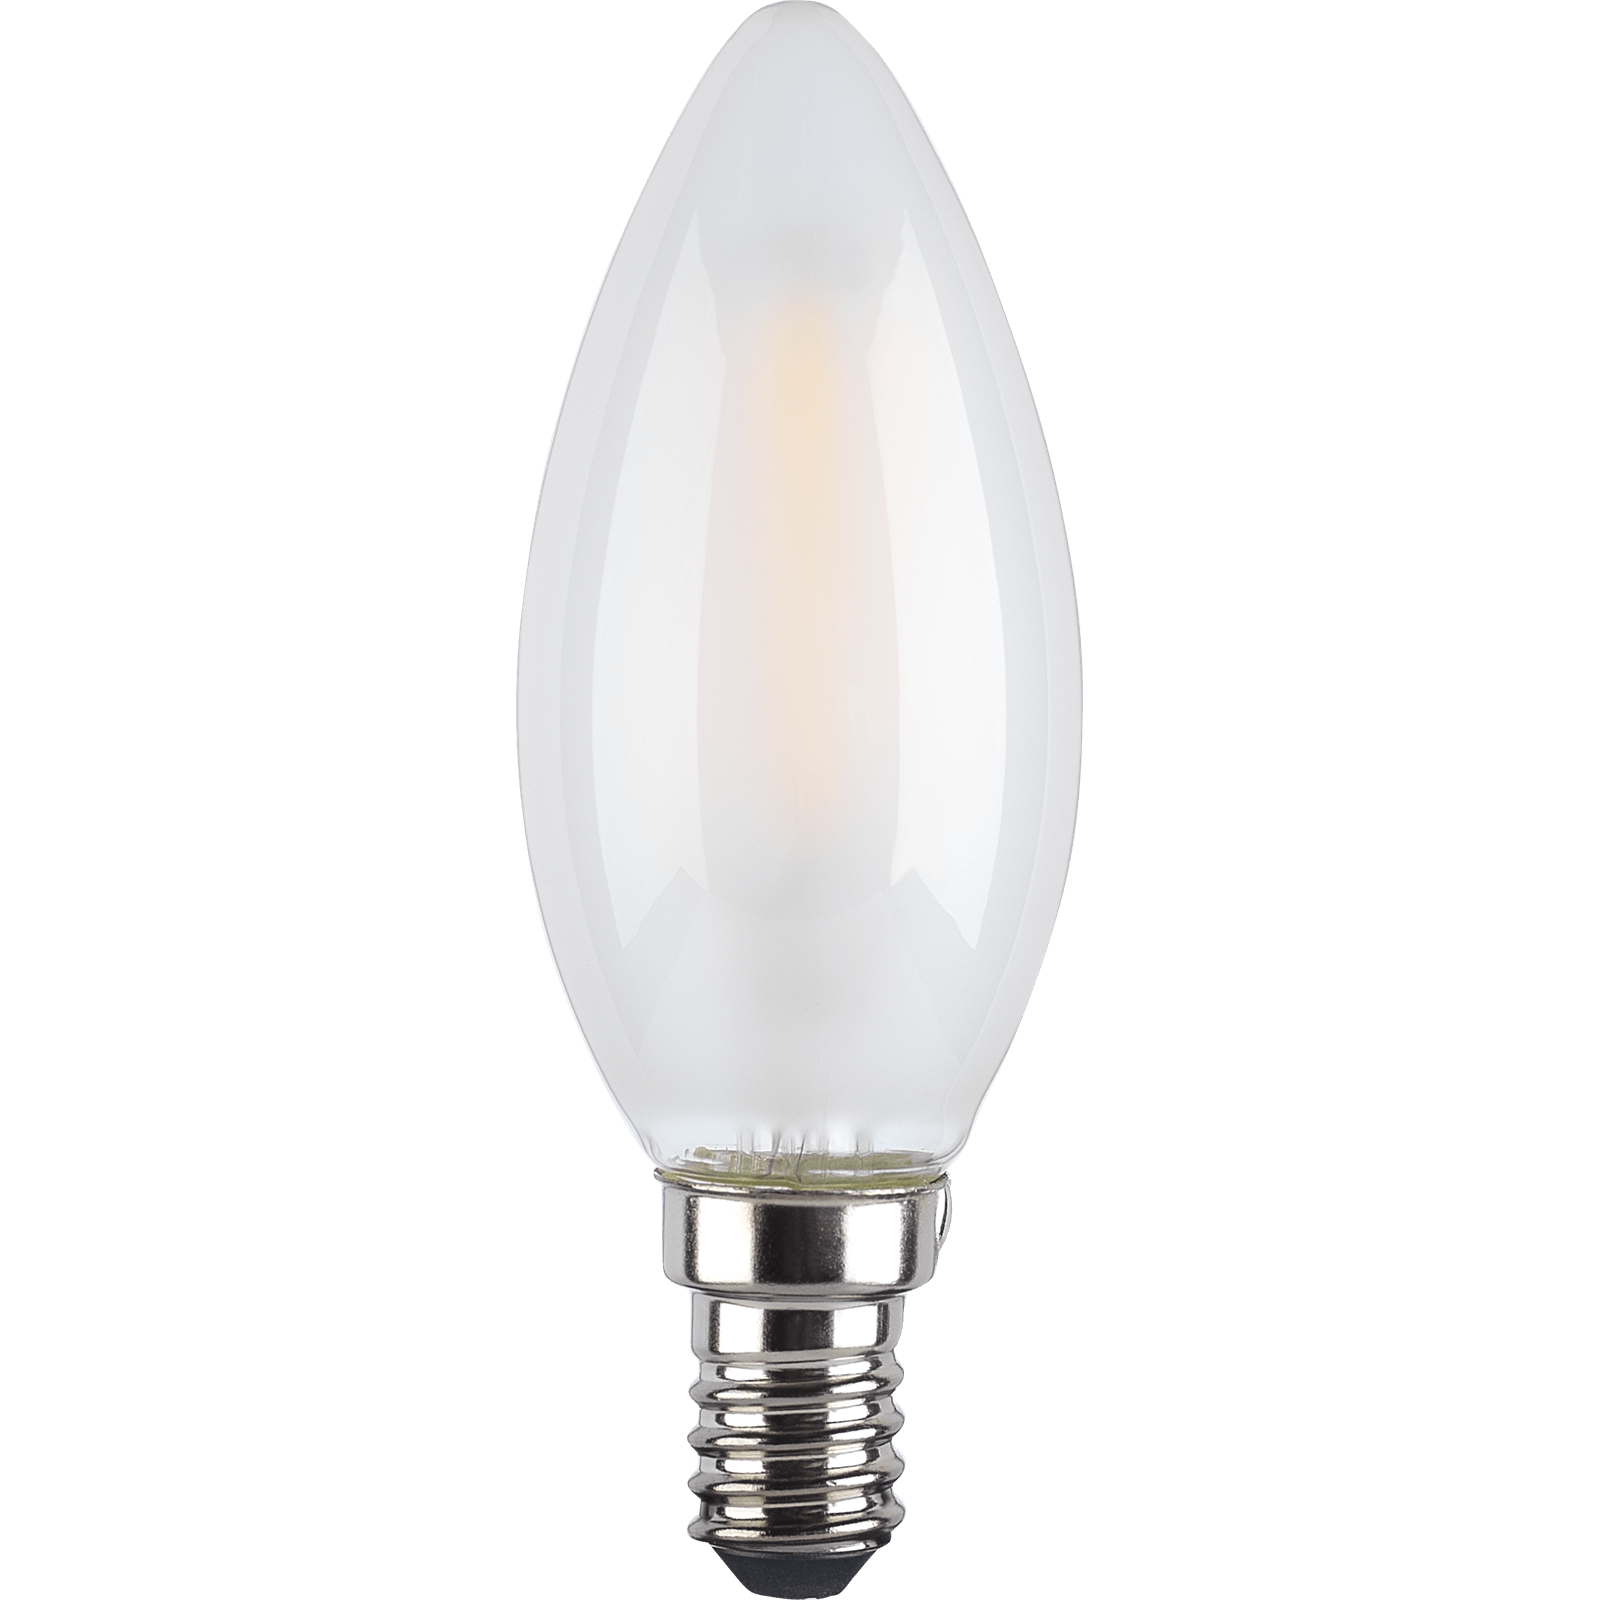 TCP LED Filament Frosted Candle 4W E14 Light Bulb